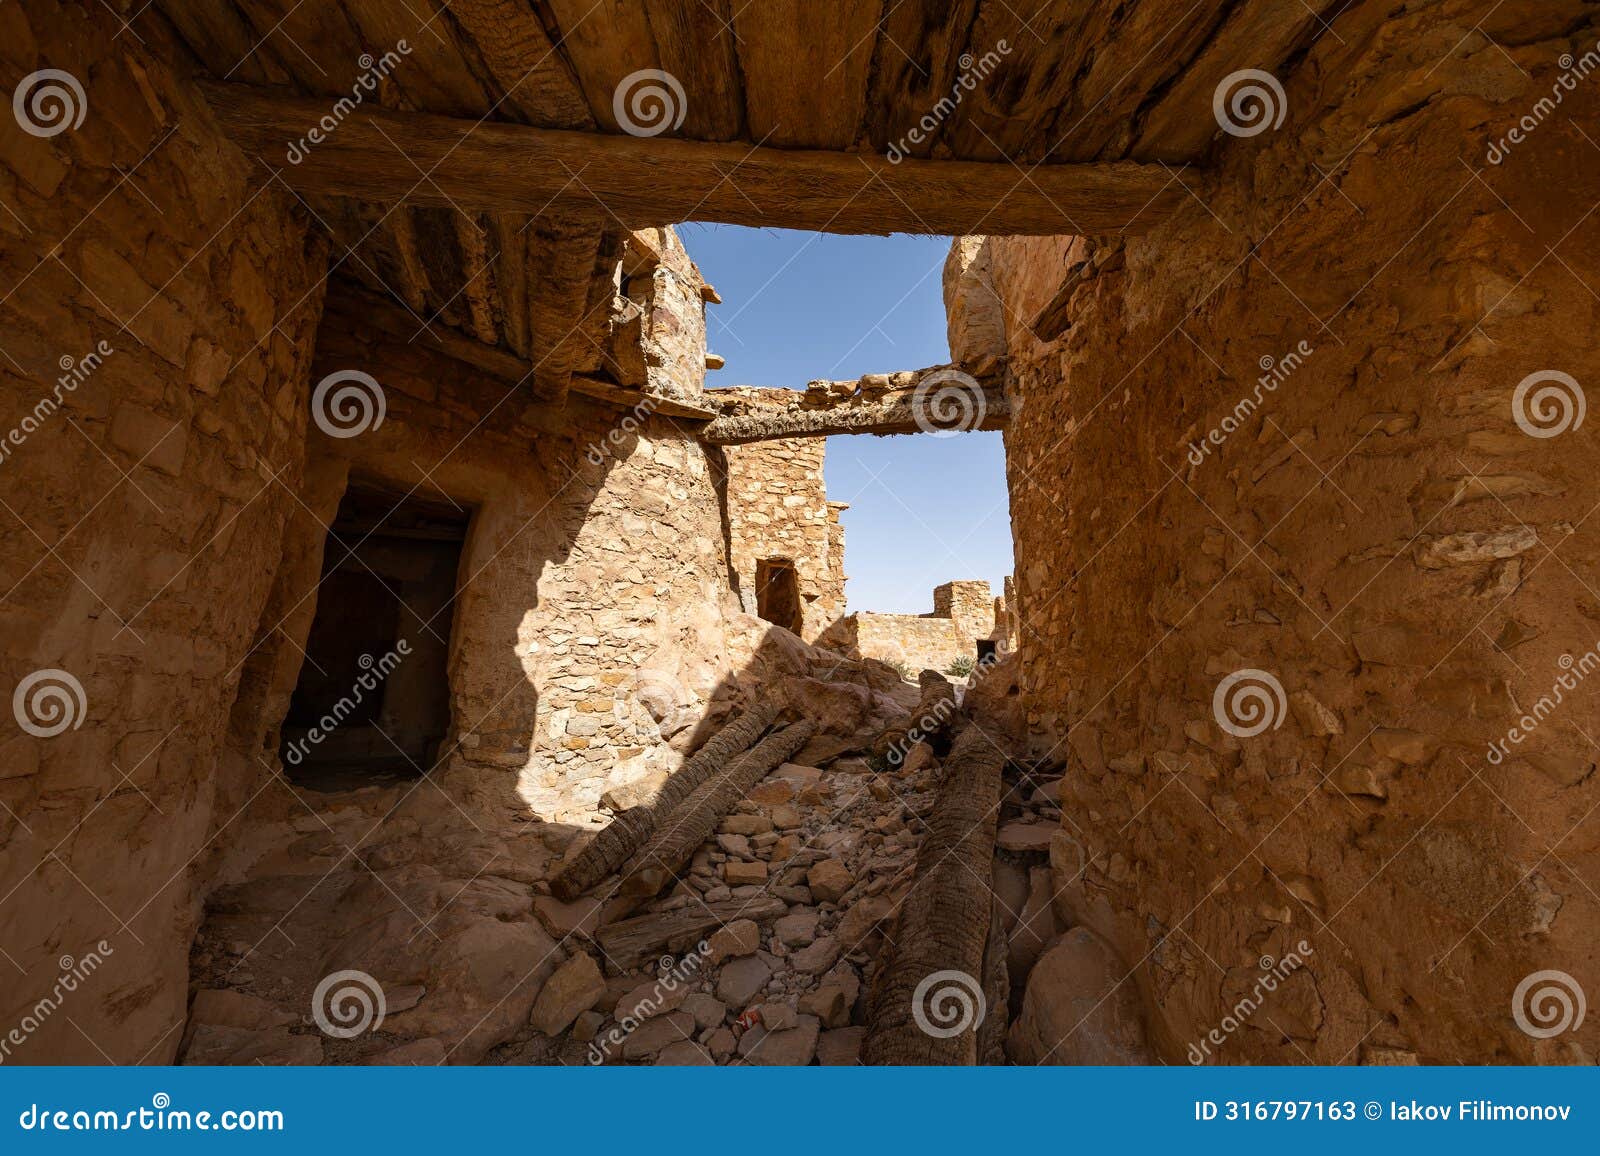 ruins of ancient fortified ksar beni barka in tataouine, tunisia